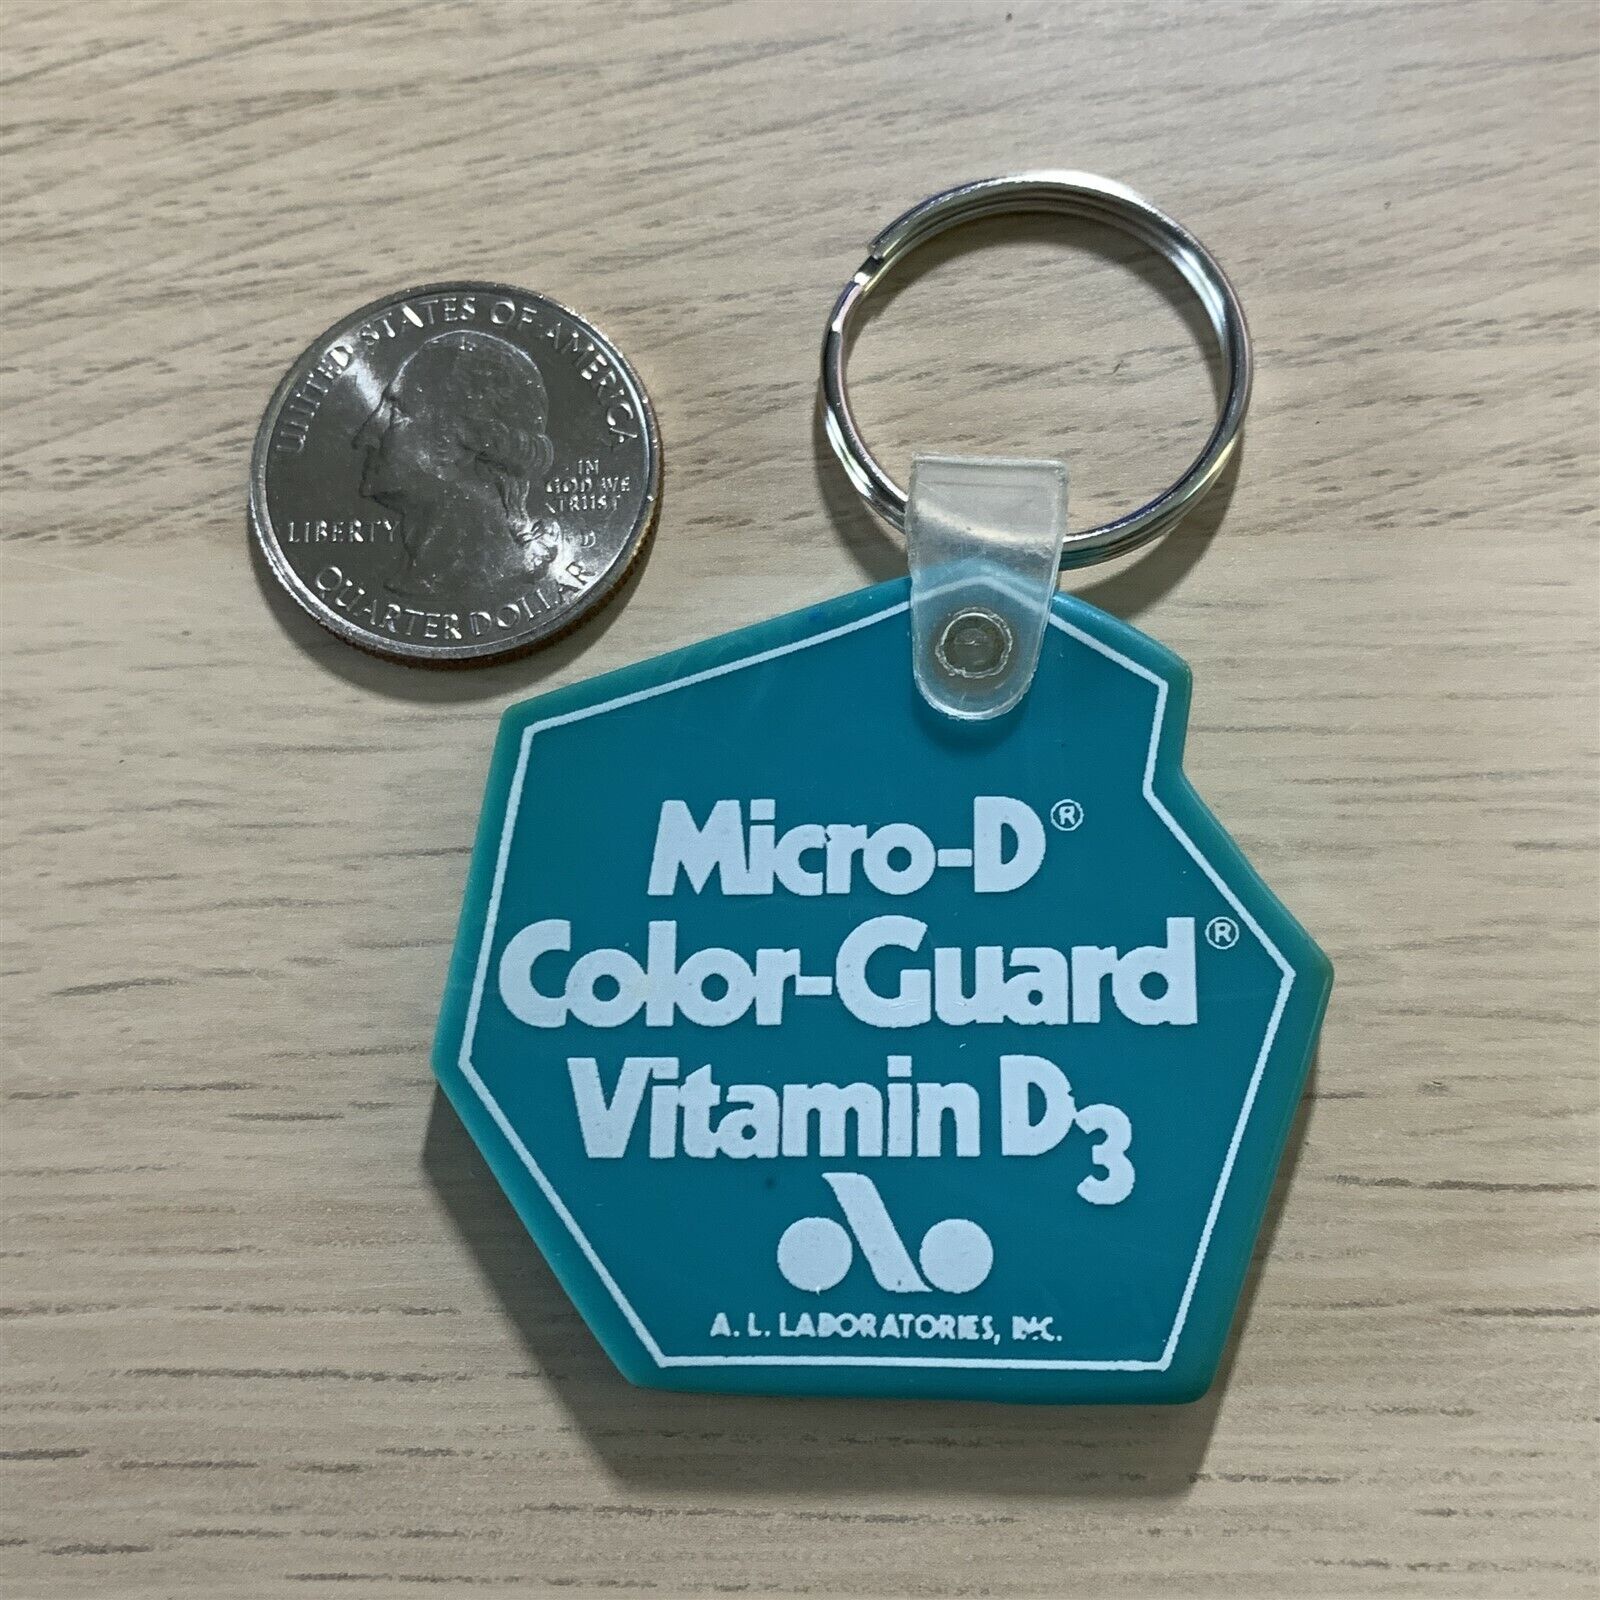 A.L Laboratories Micro-D Color-Guard Vitamin D3 Promo Keychain Key Ring #42334